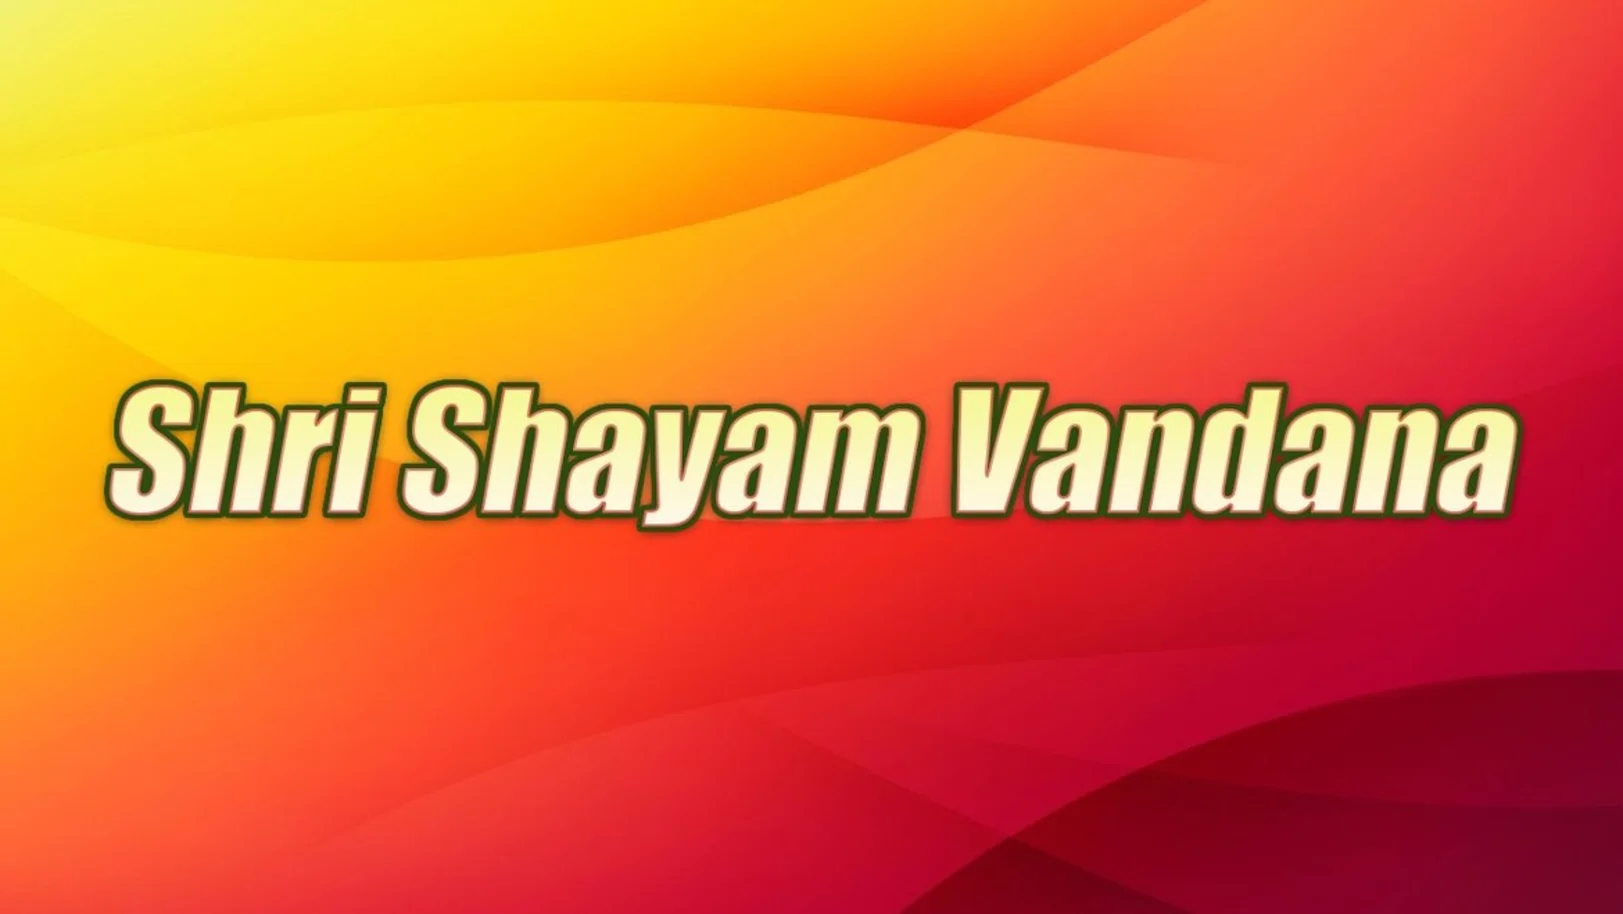 Shri Shayam Vandana Streaming Now On Aastha Bhajan